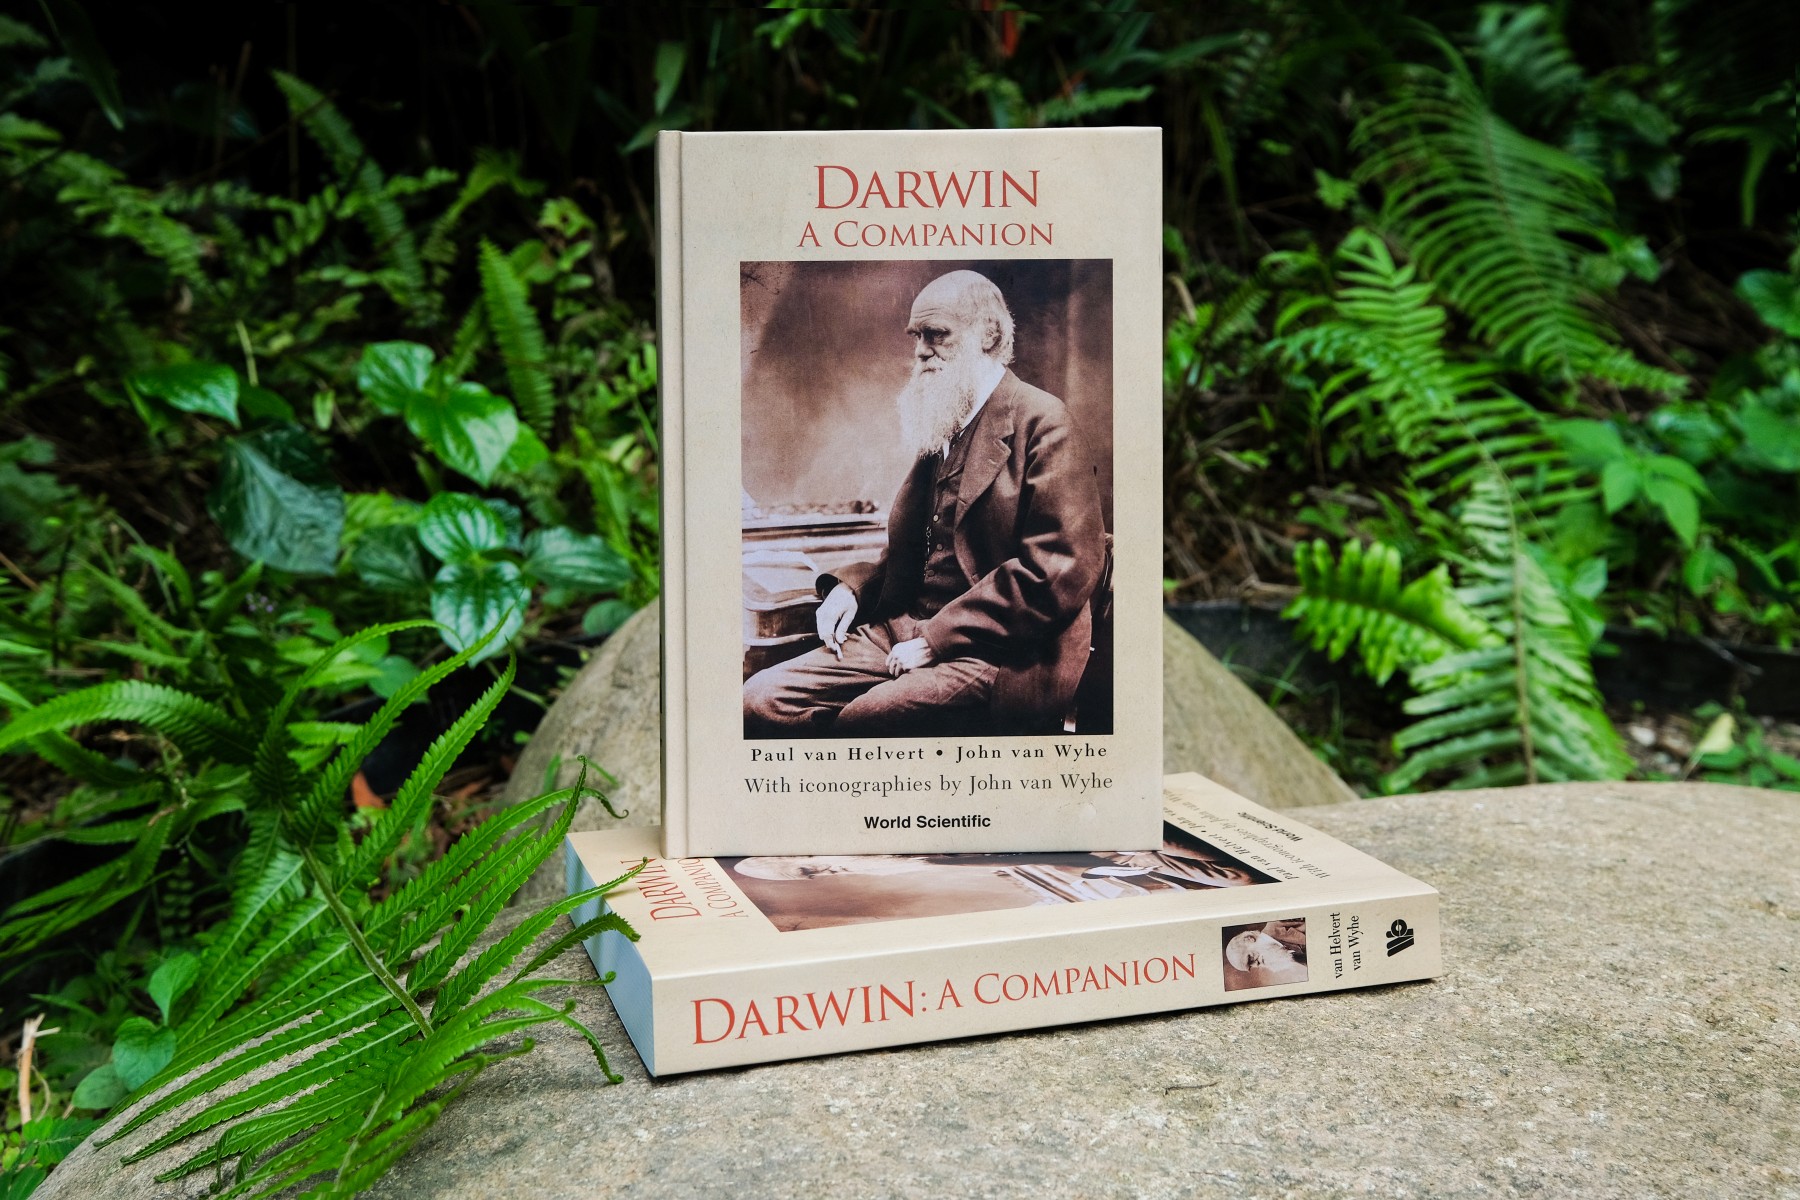 New book reveals Charles Darwin’s cultural impact in unprecedented detail